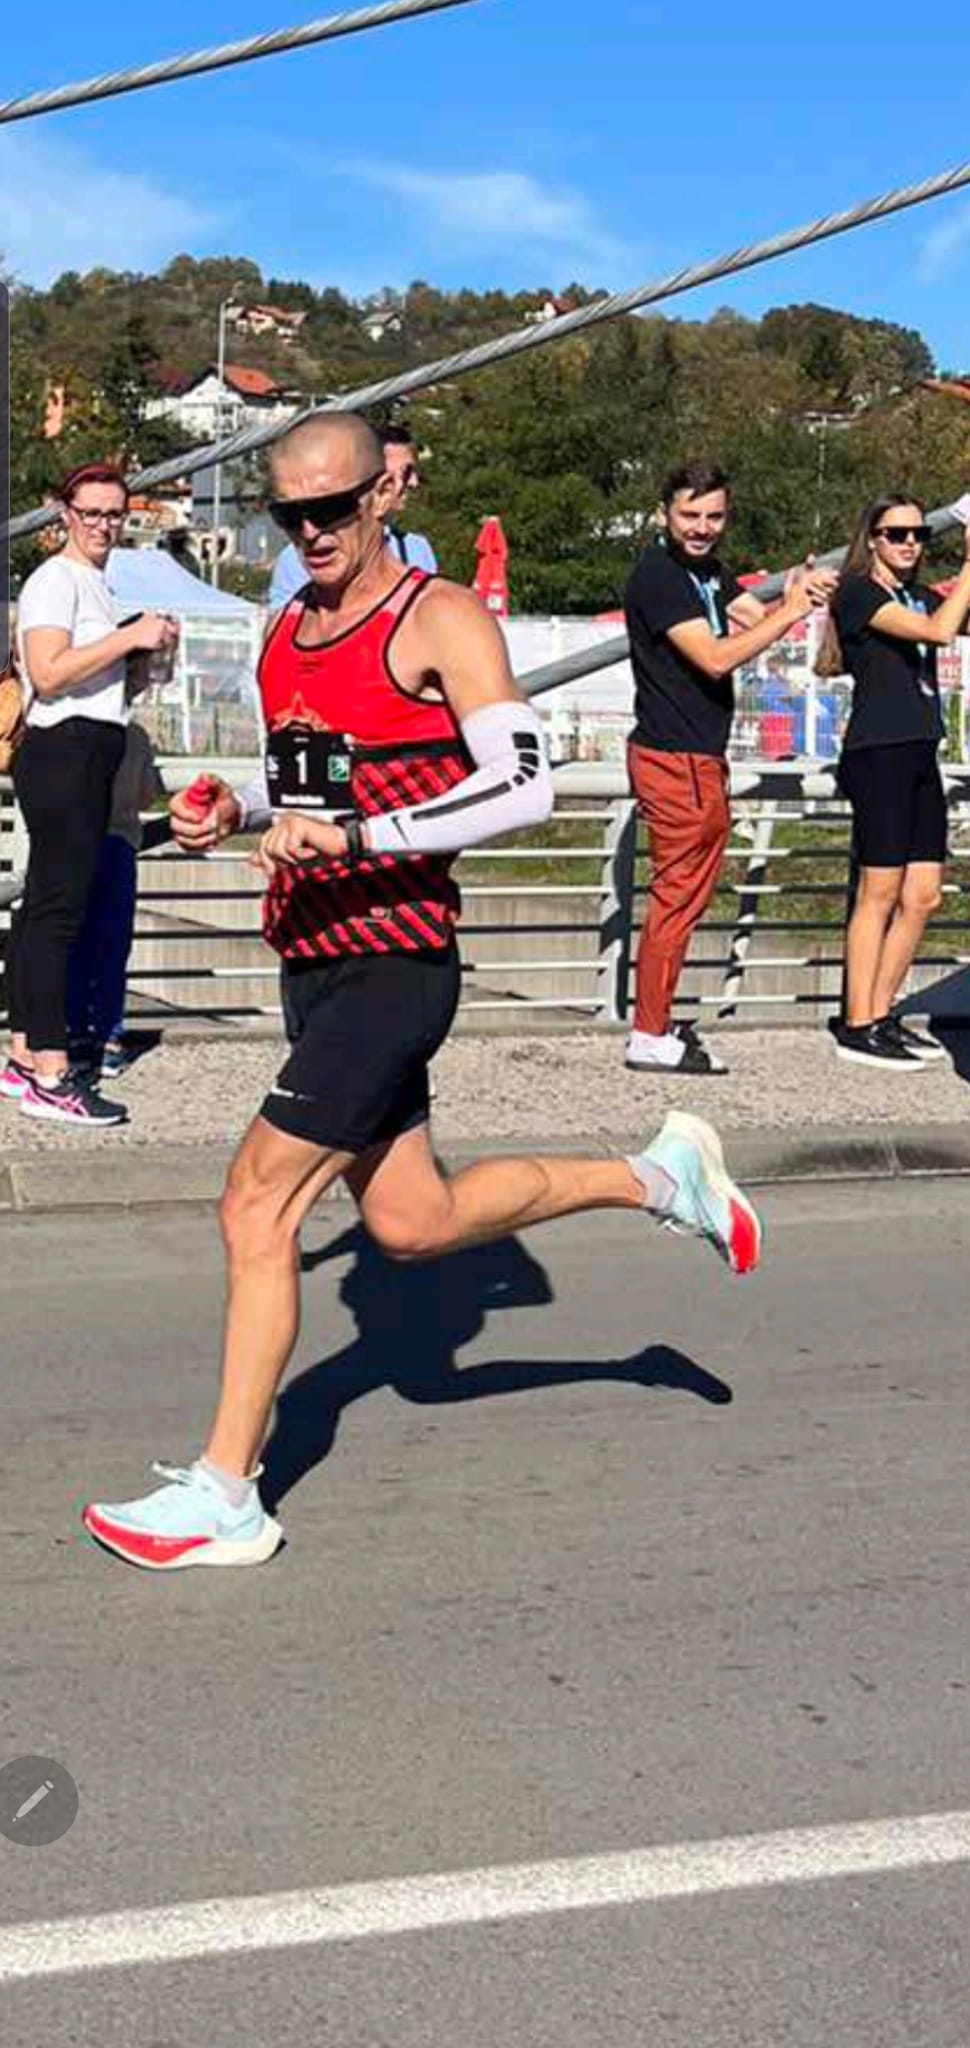 maraton TZ - sl 17 Mirzet Halilcevic